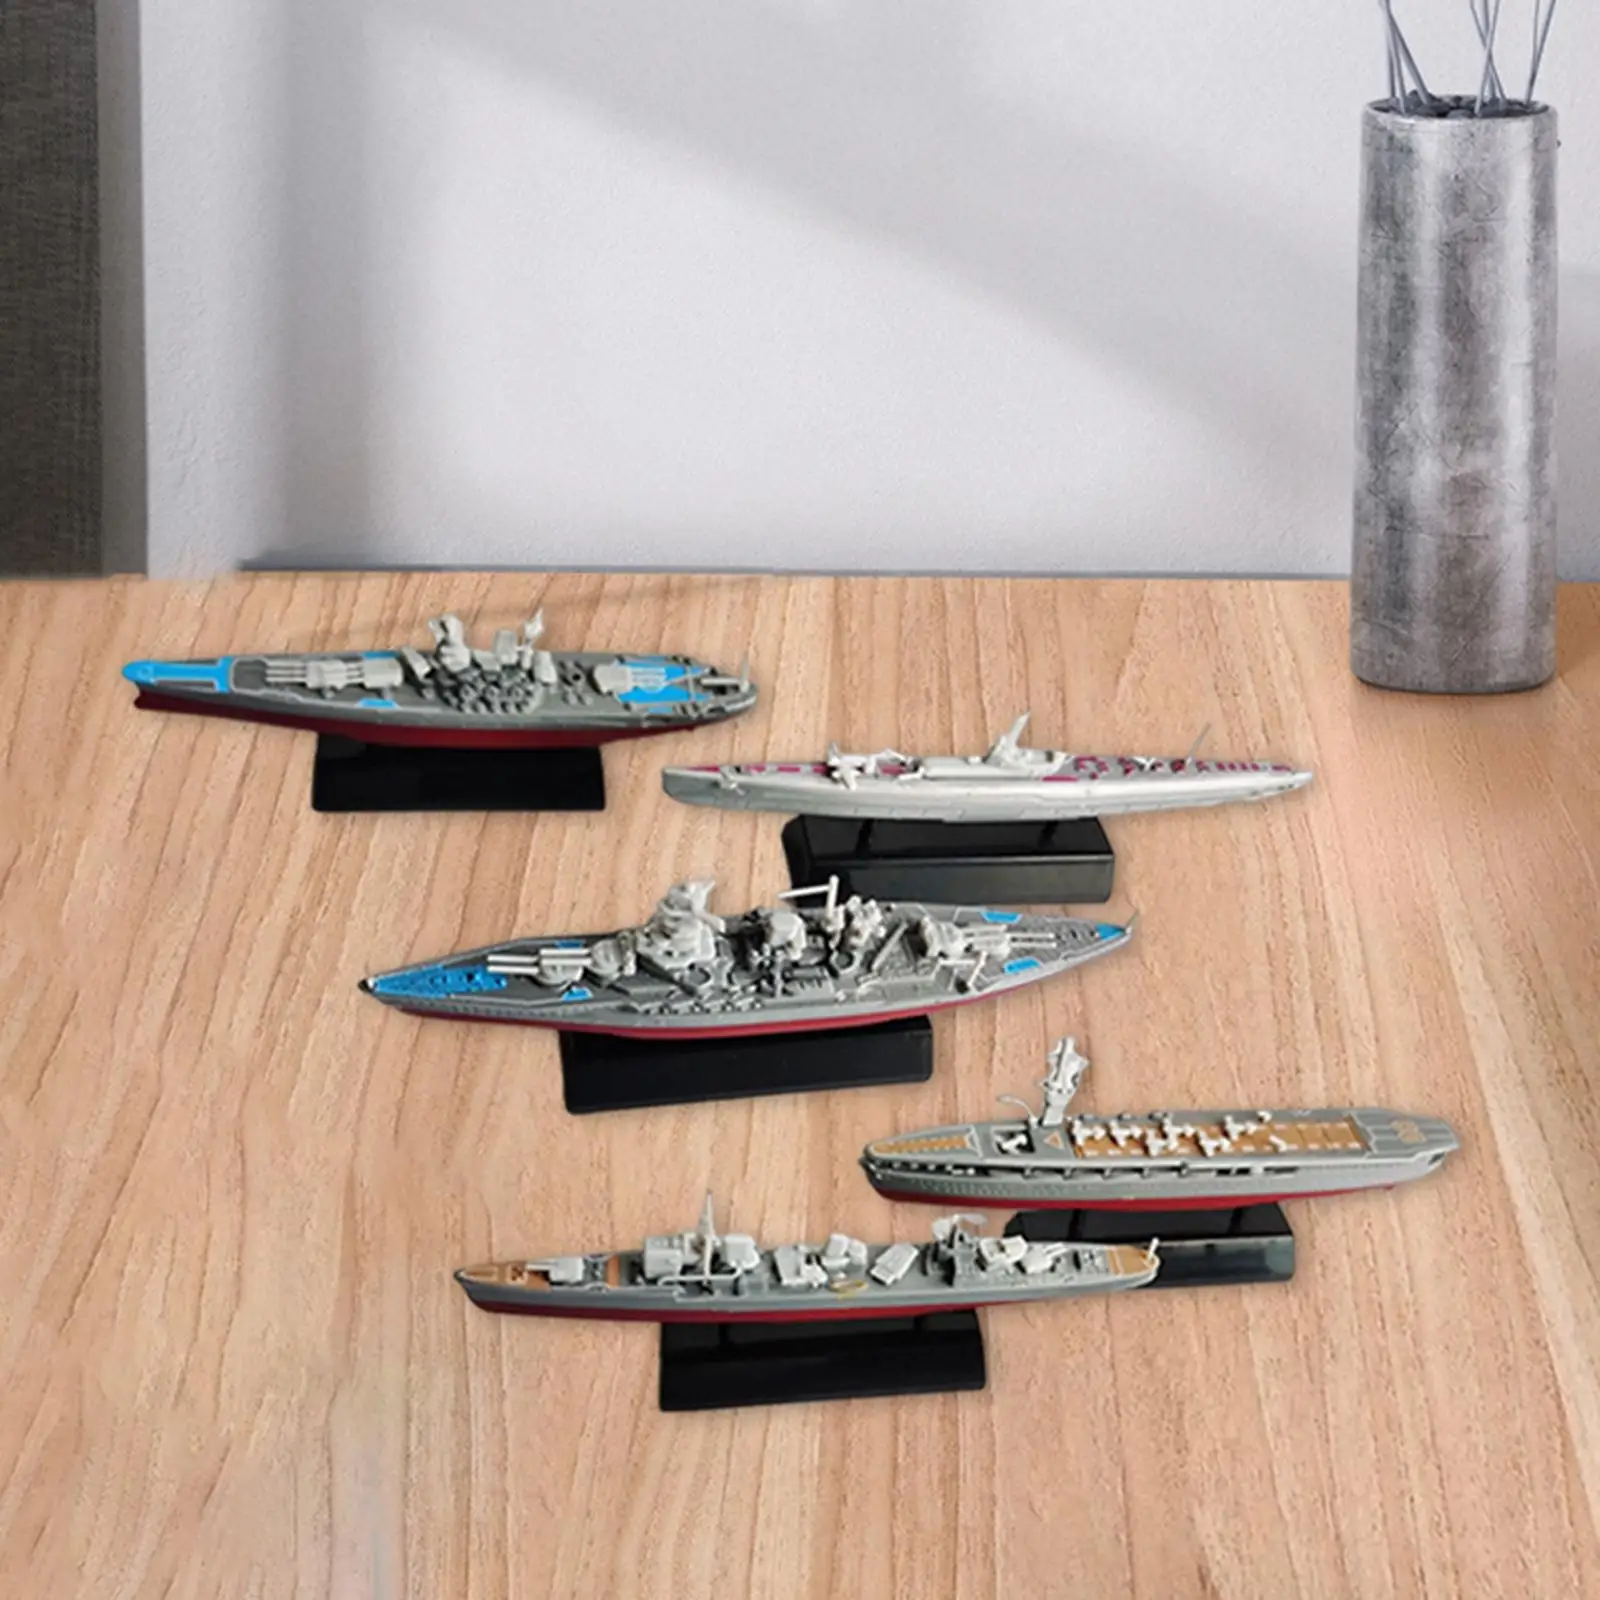 5Pcs Simulation Warship Watercraft Model Ornaments Miniature for Boys Girls